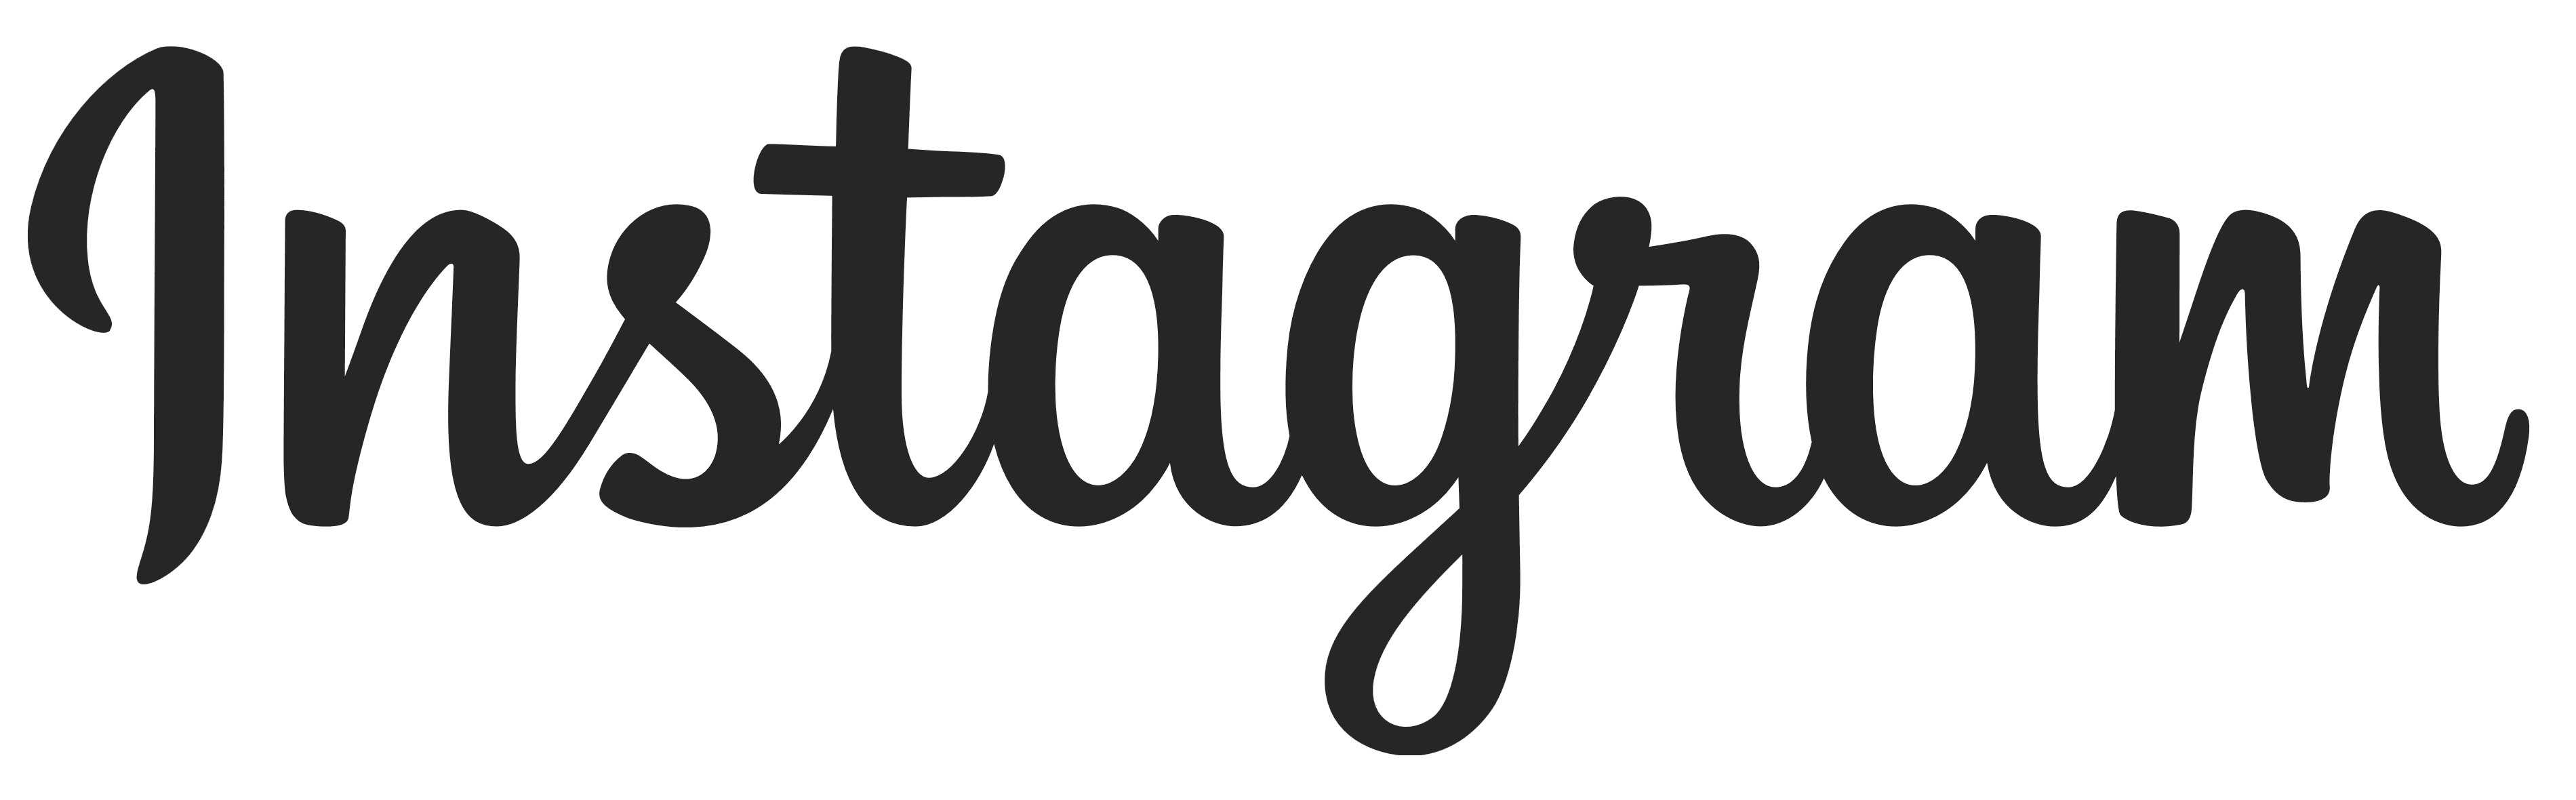 Instagram logo, logotype